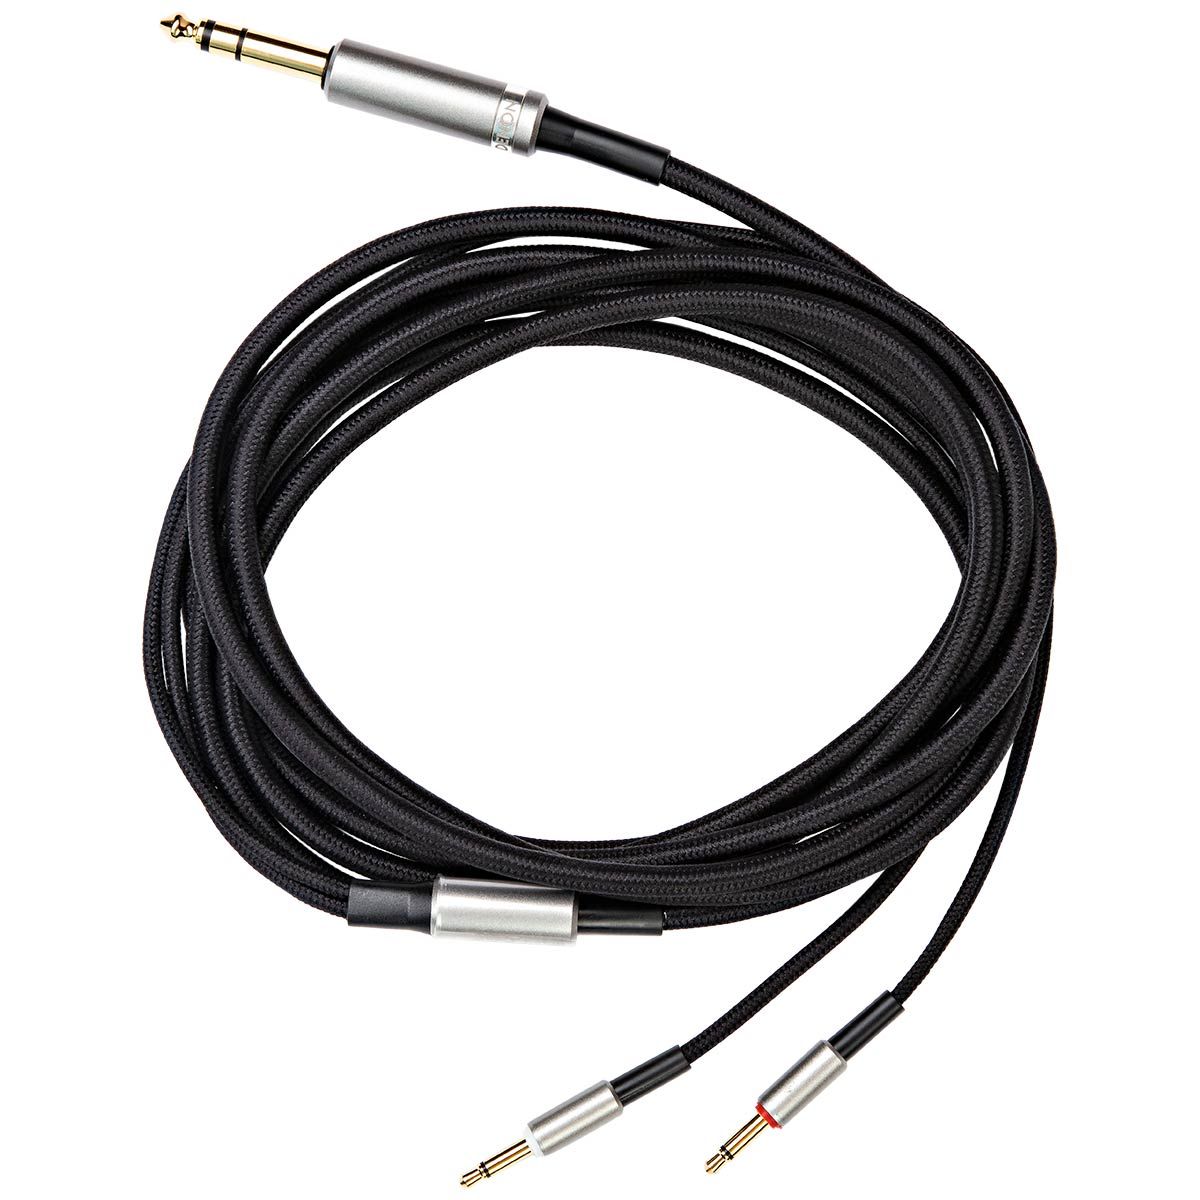 Denon AH-D9200 Bamboo Over-Ear Premium Headphones - cable